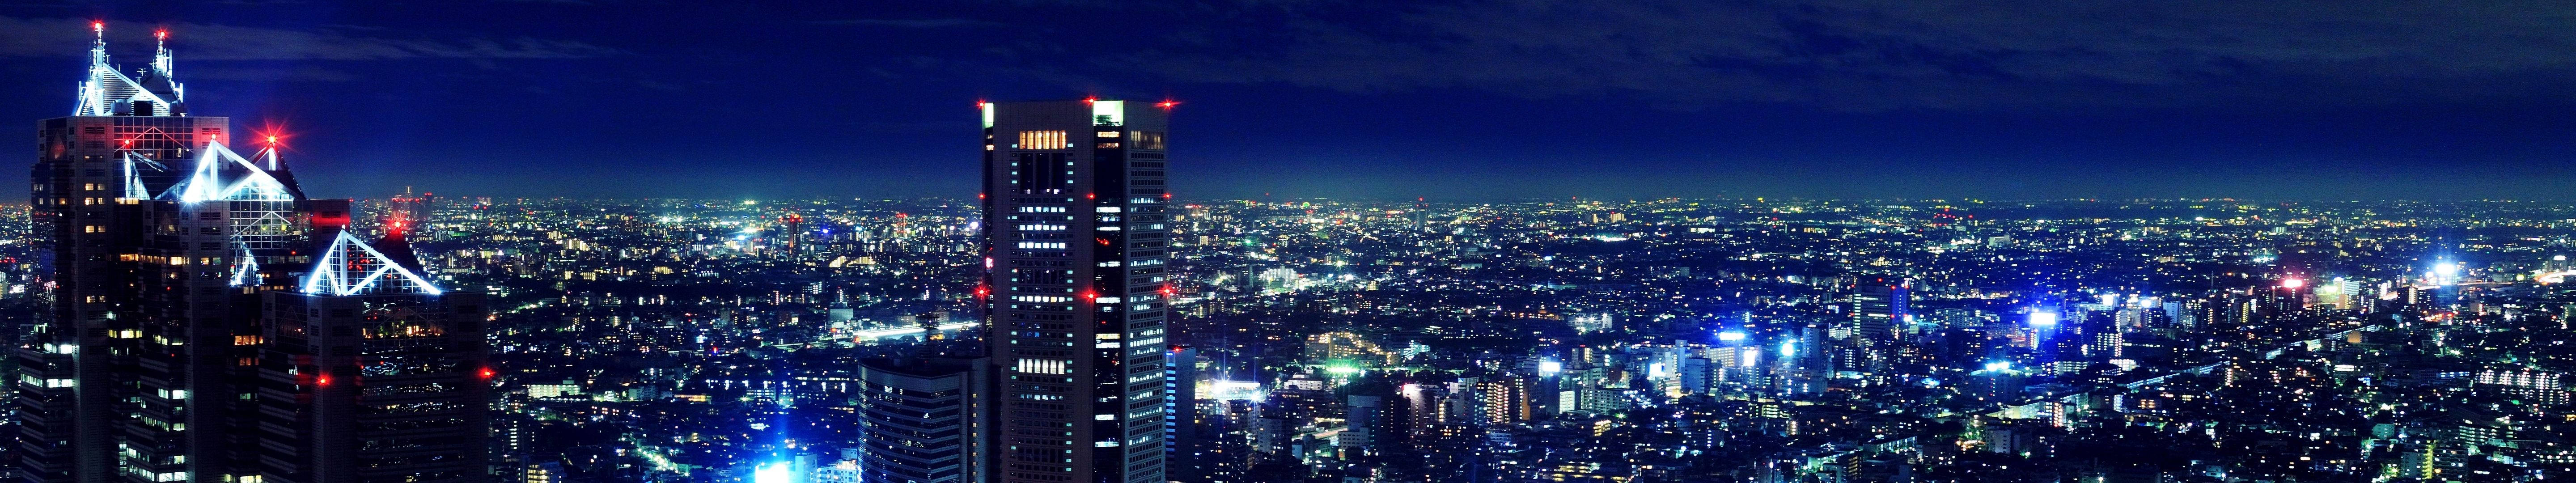 3 Monitor Tokyo Nat by skyline med neonlys oplyst bygninger Wallpaper